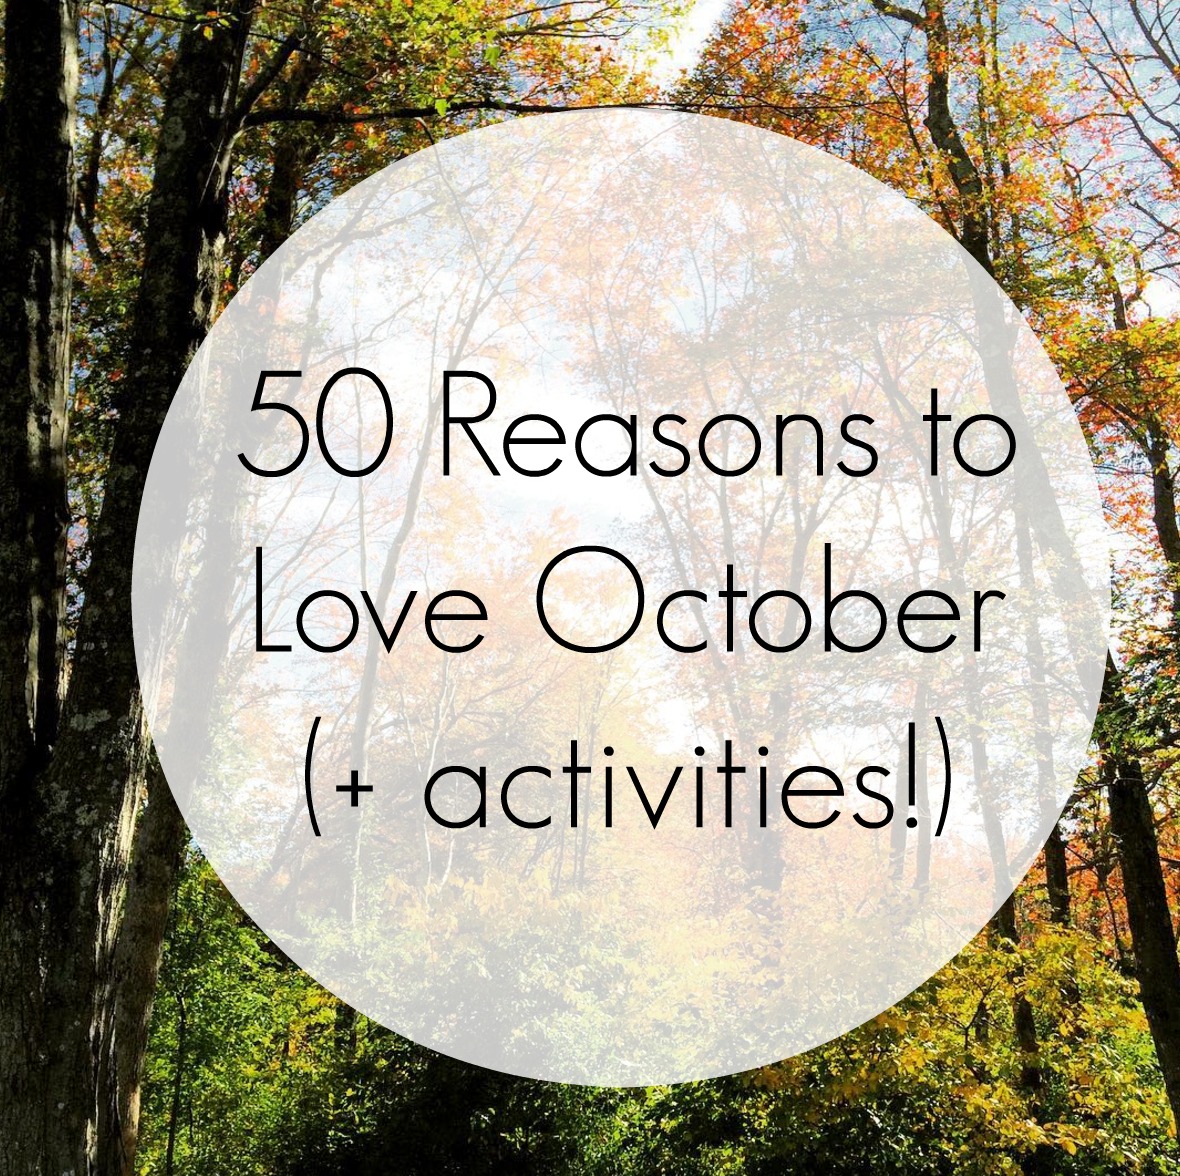 50 Reasons to Love October + activities